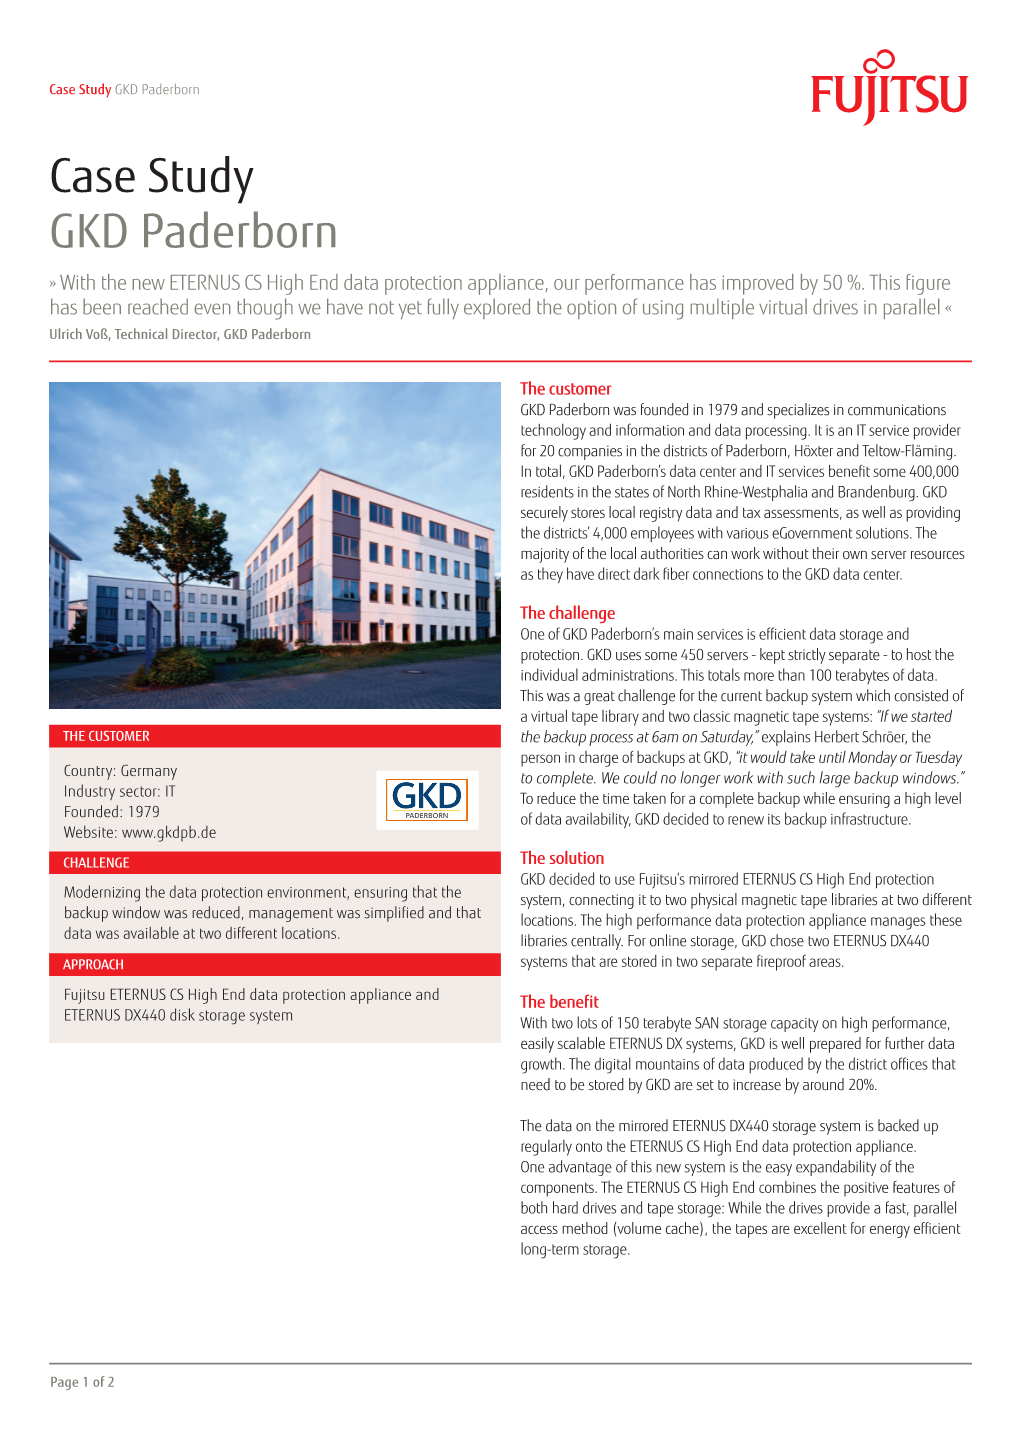 Case Study GKD Paderborn